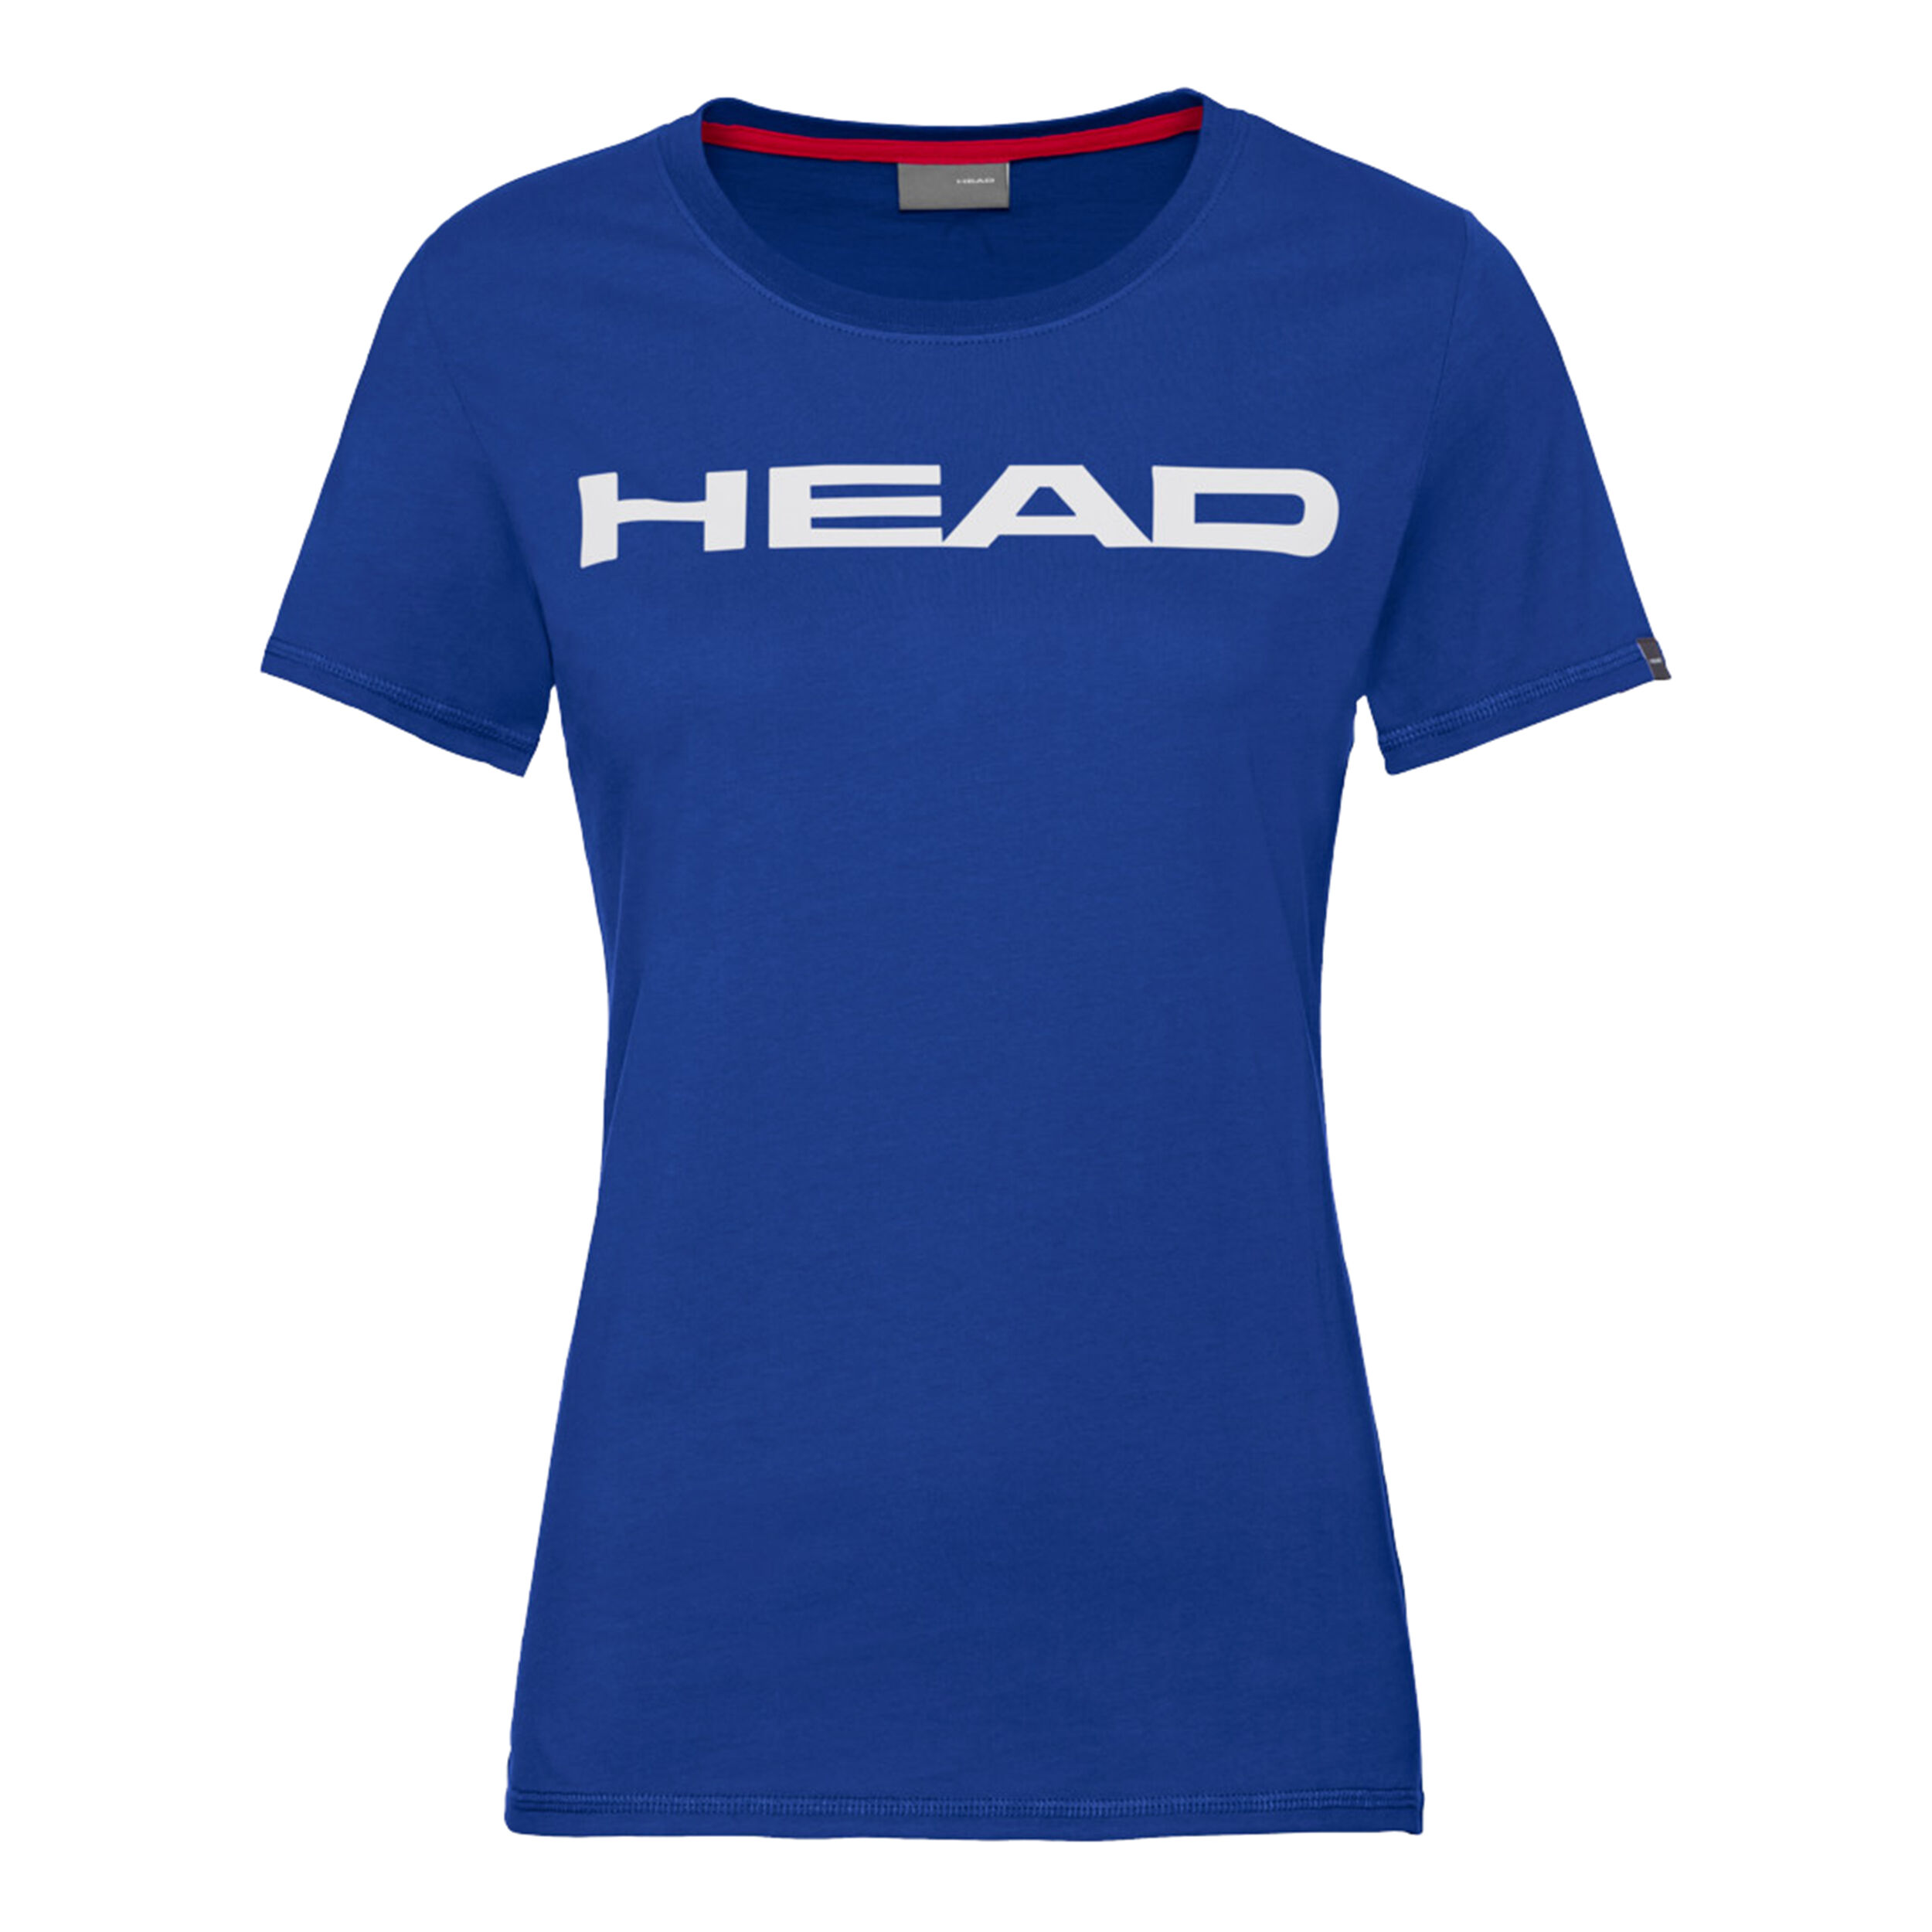 show original title Details about   Head Womens Top Club Tank Tennis Tank Tennis Shirt T-Shirt 814171 